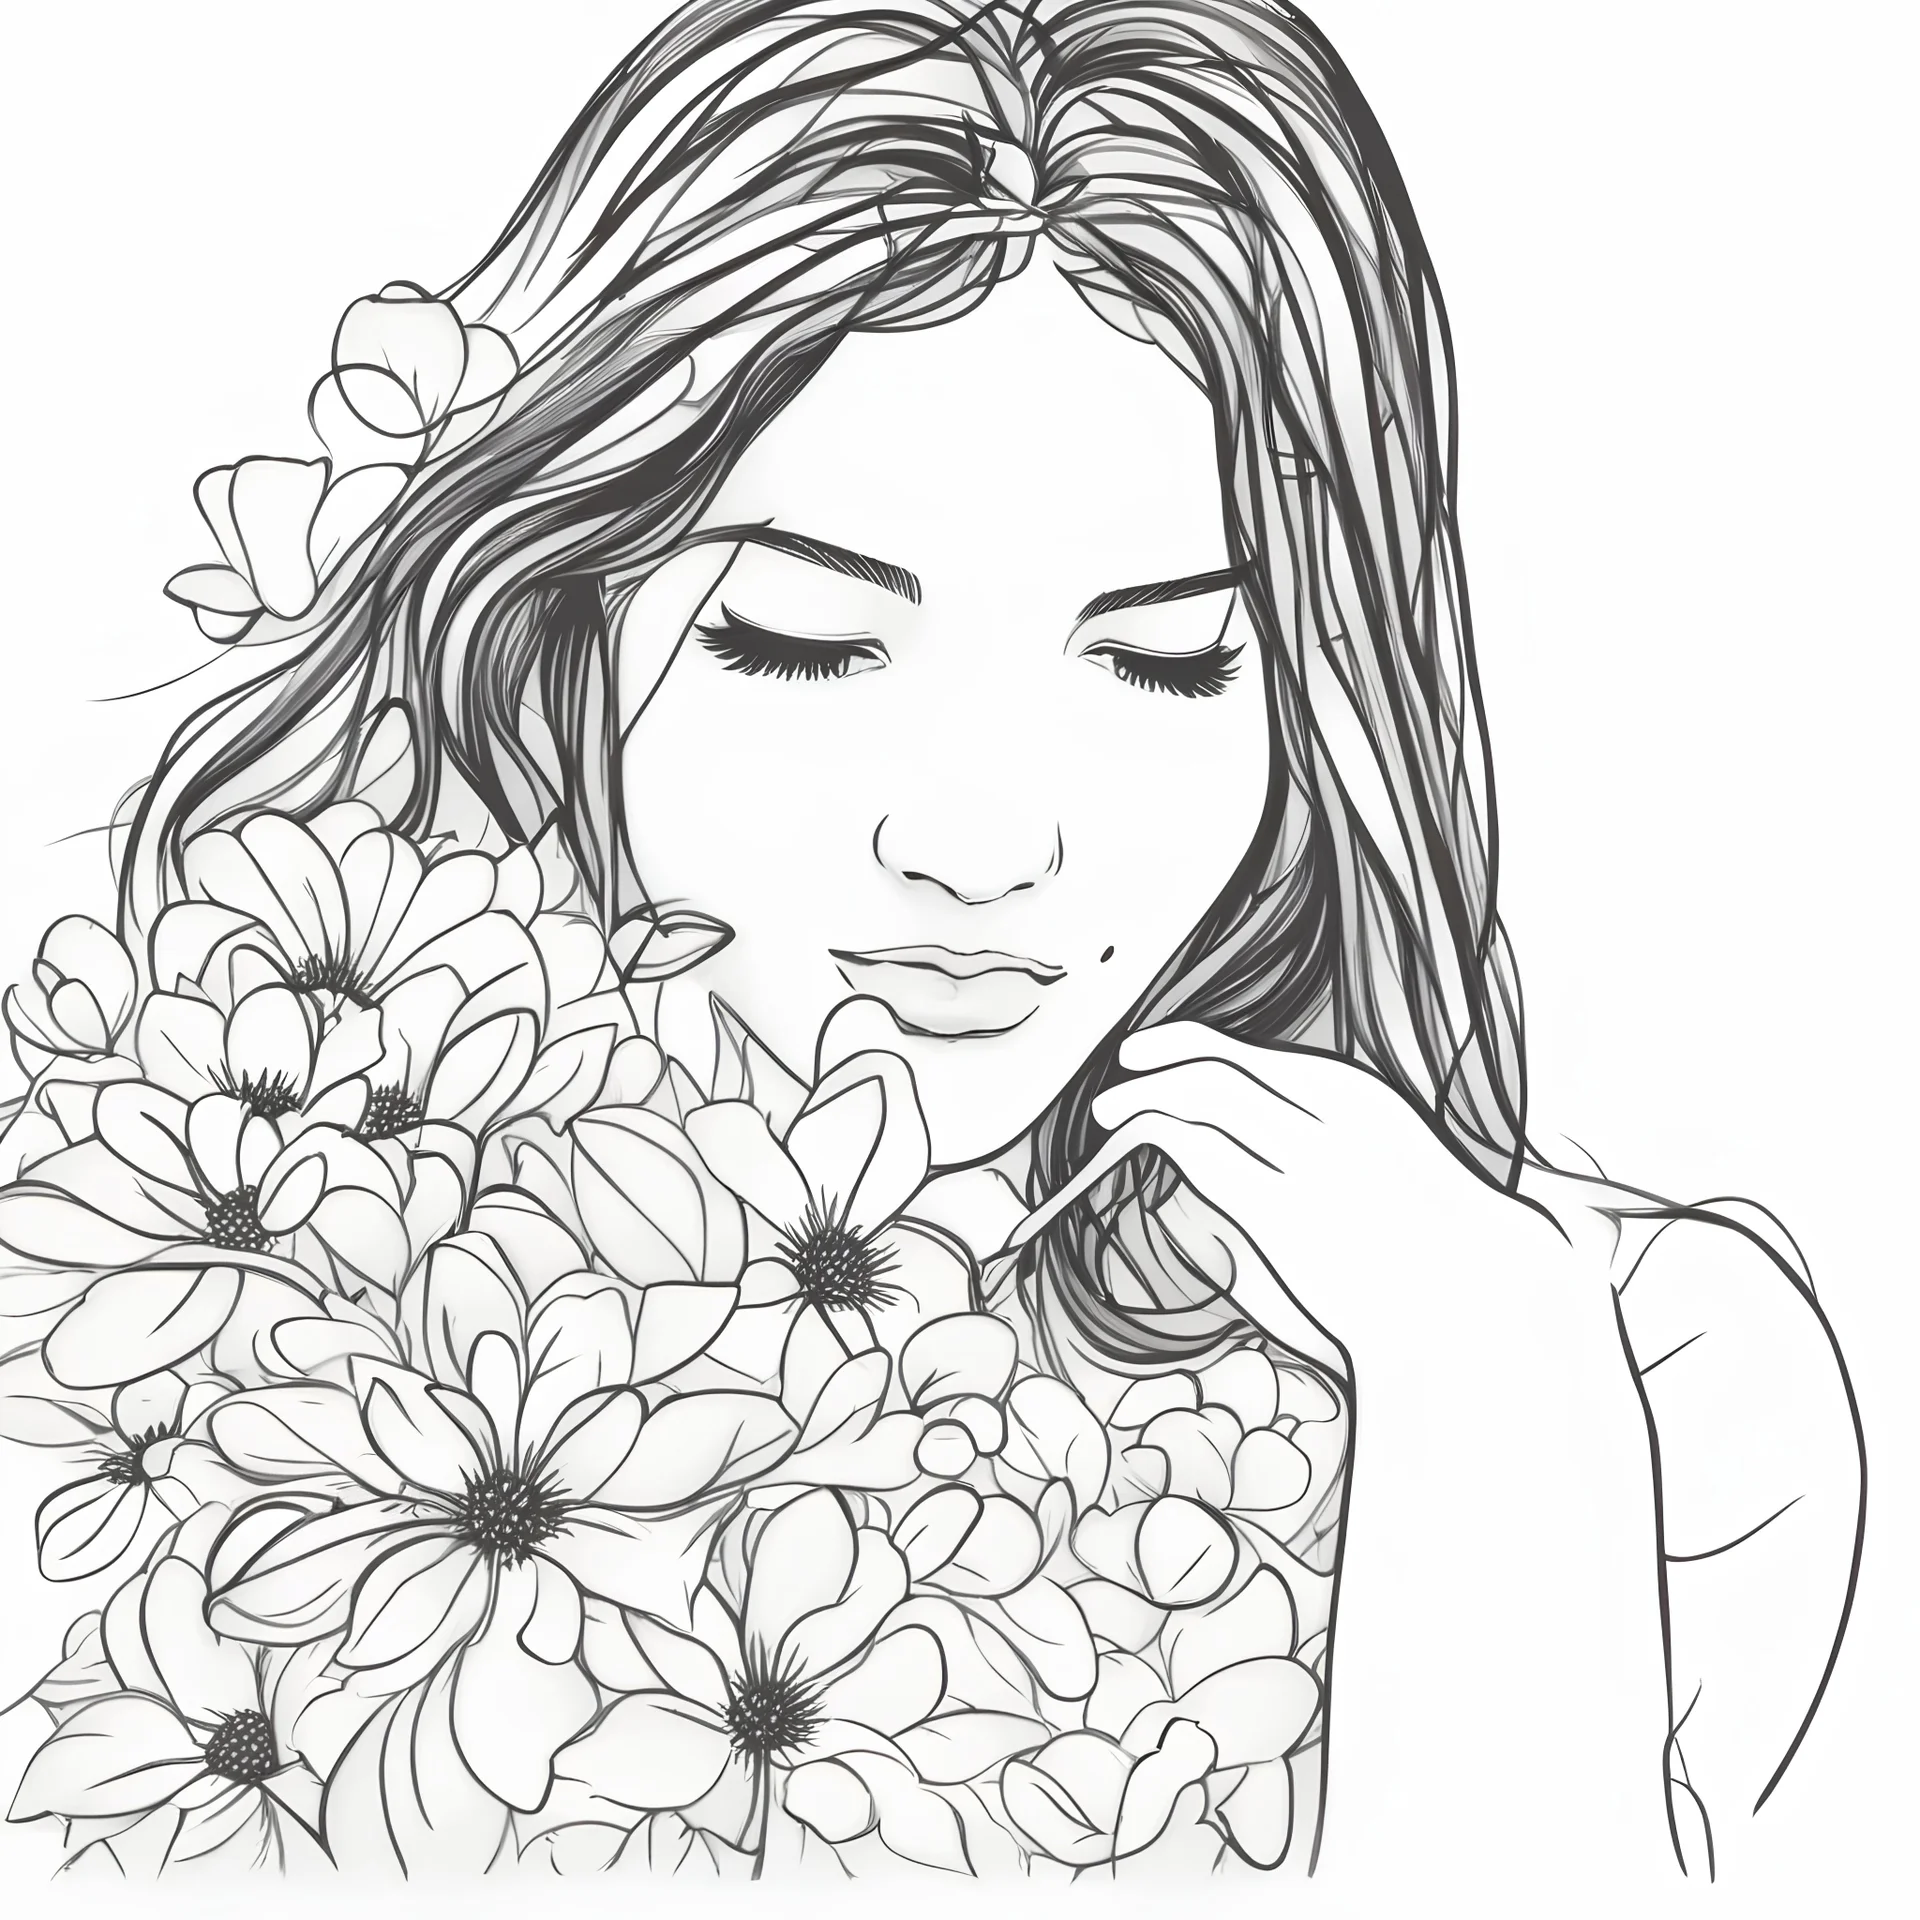 incomplete, haphazard line scribble, ephemeral clean outline art, with scribble handwritten "love", girl holding a flower, clip art